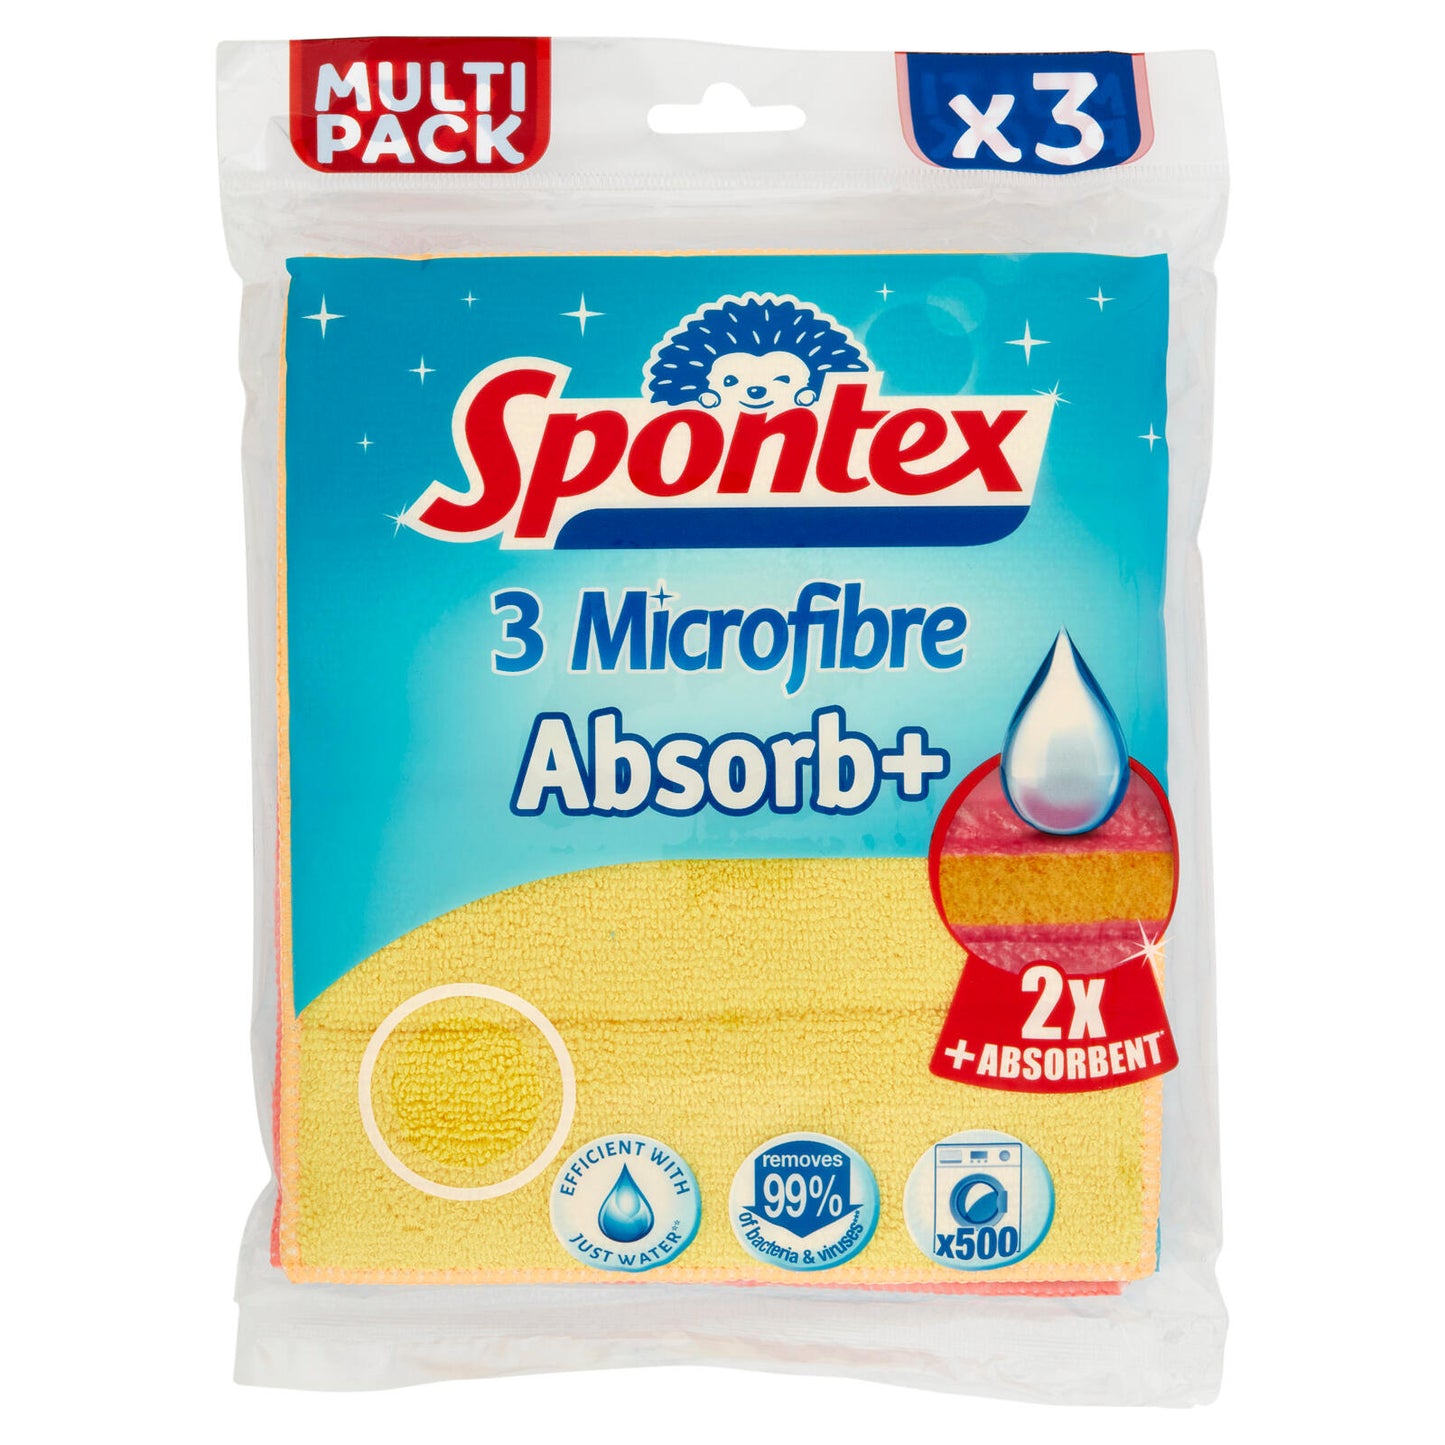 Spontex Microfibre Absorb+ x3